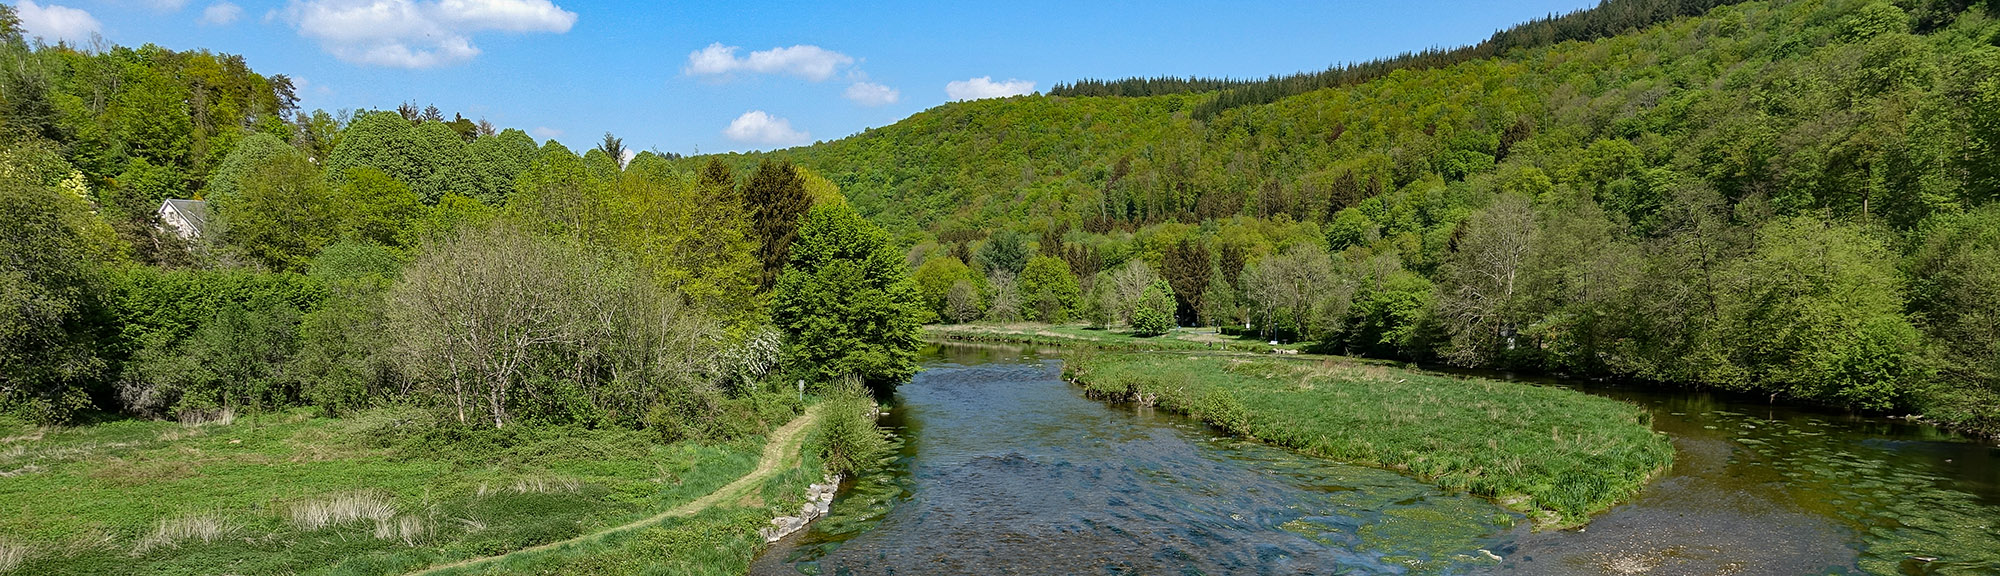 River Semois